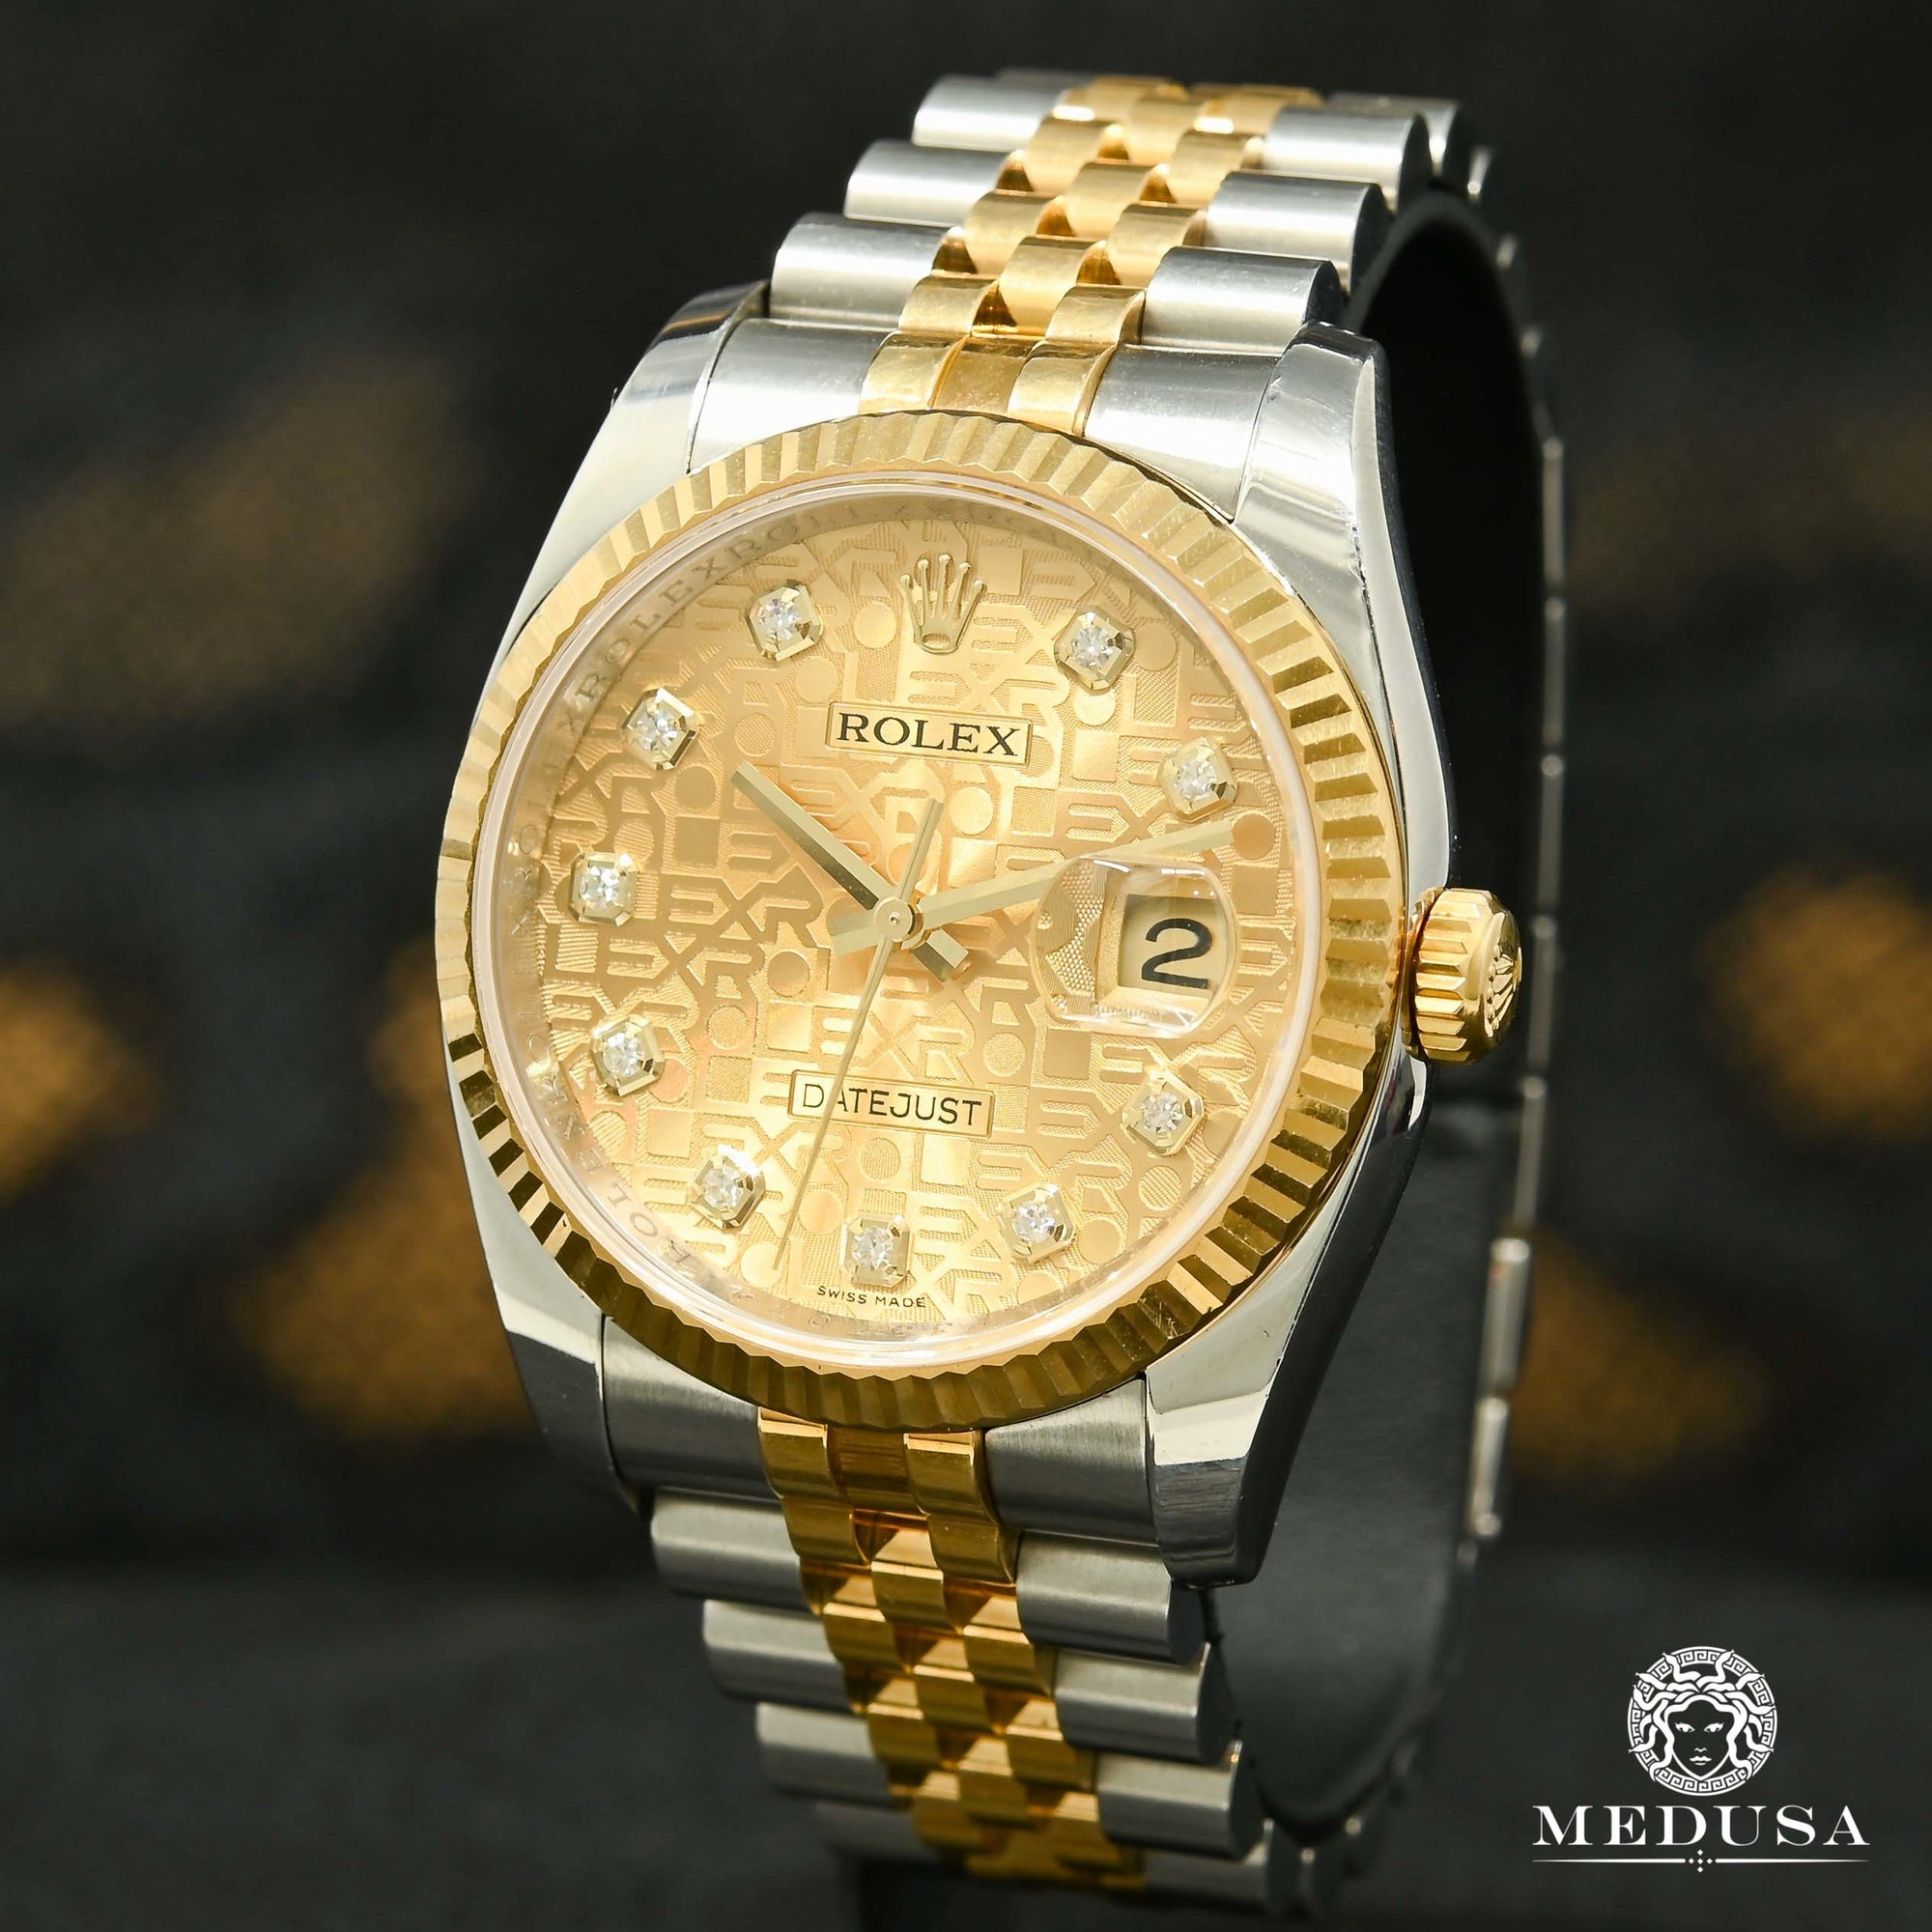 Rolex watch | Rolex Datejust 36mm Men's Watch - 116233 Anniversary Dial Champagne Gold 2 Tones